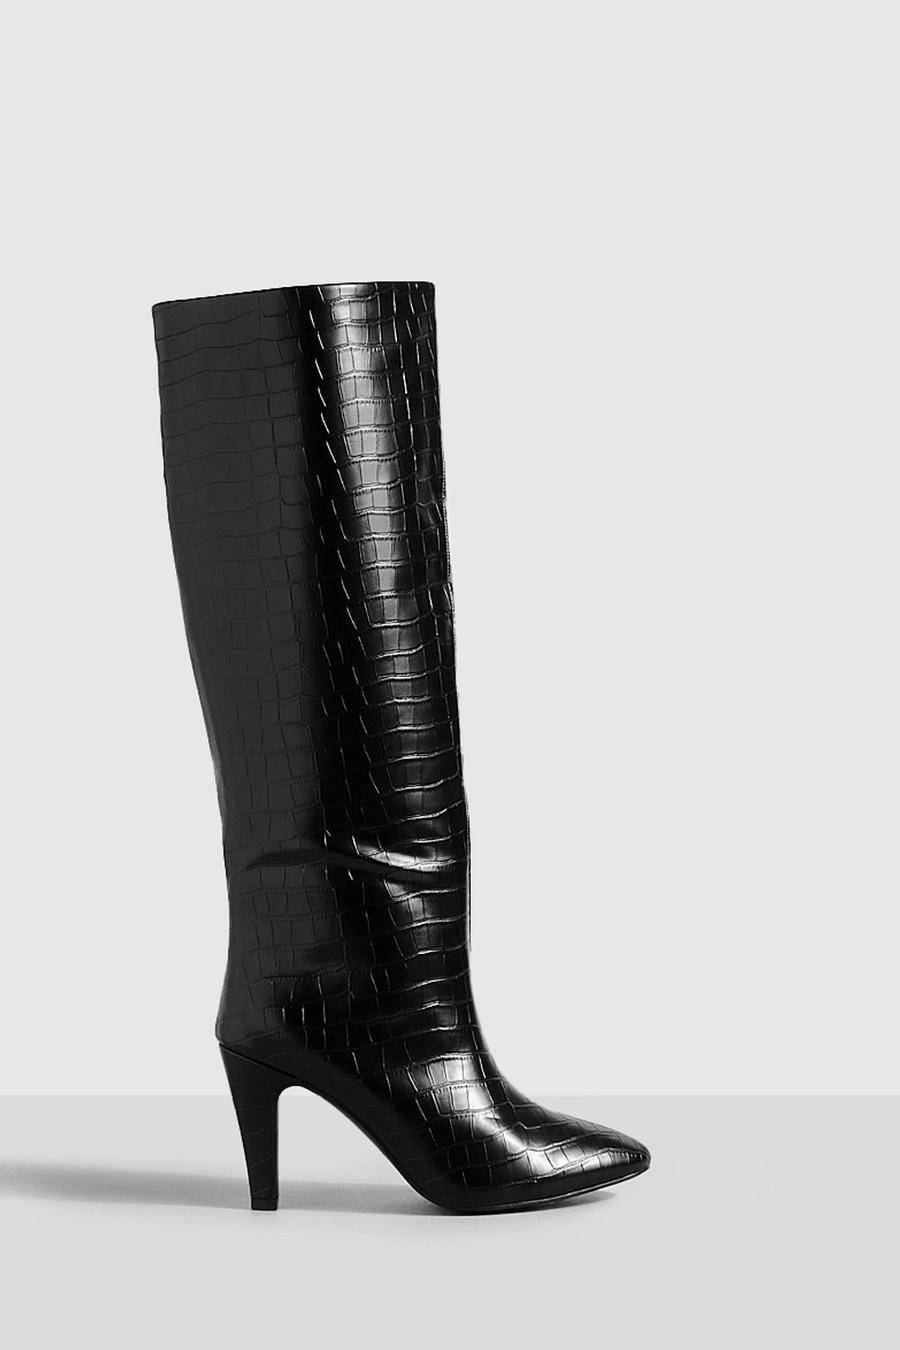 Black croc Low Heel Pointed Knee High Boots